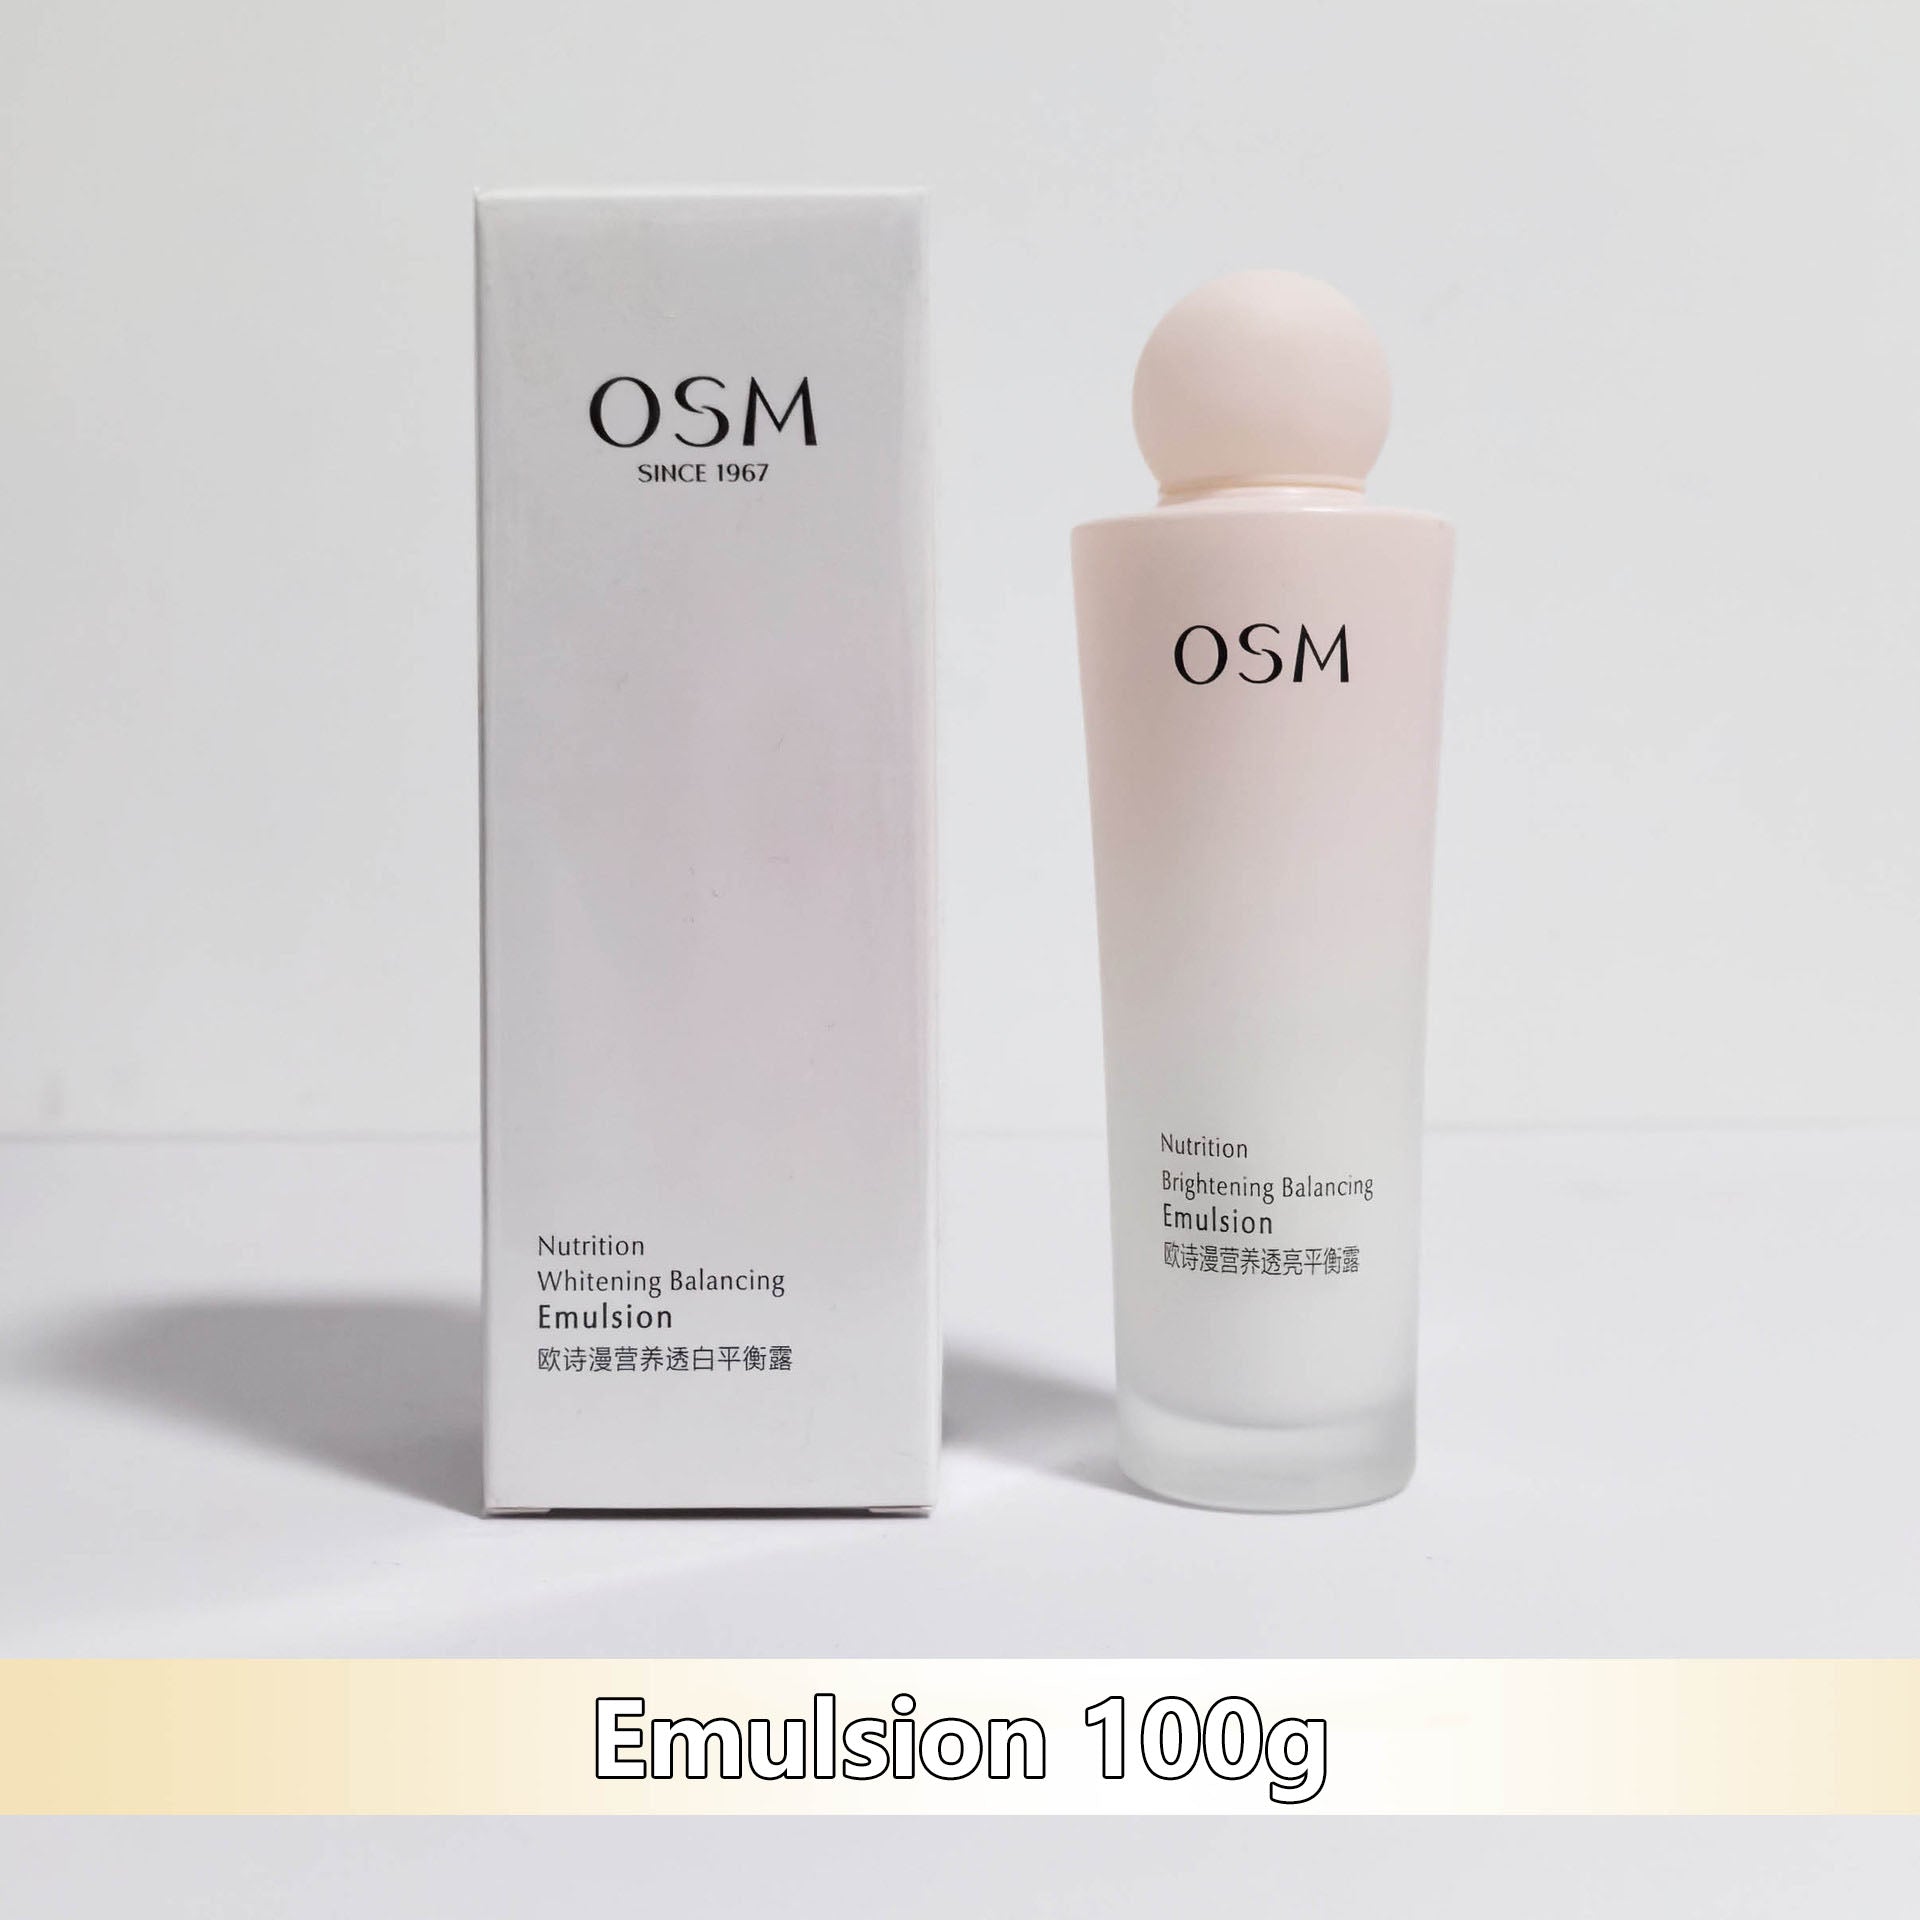 OSM Nutrition Brightening Balancing Emulsion 100g 欧诗漫营养透亮平衡露